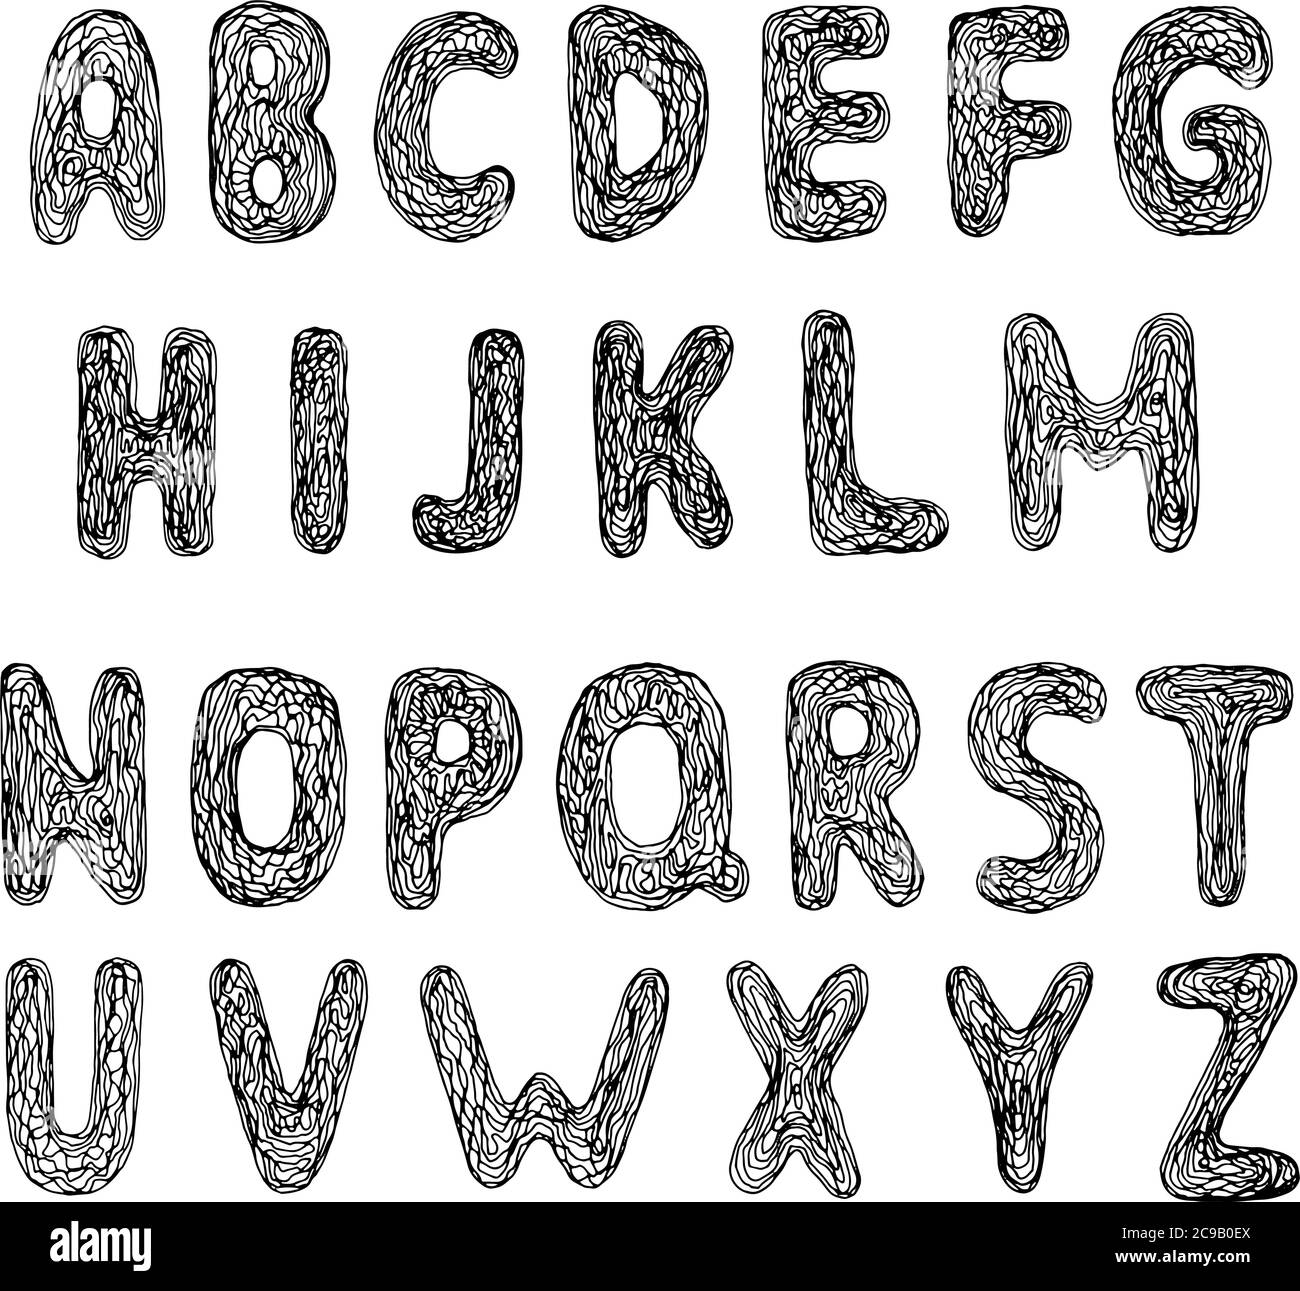 Hand drawn doodle alphabet. English letters design. Minimal style ...